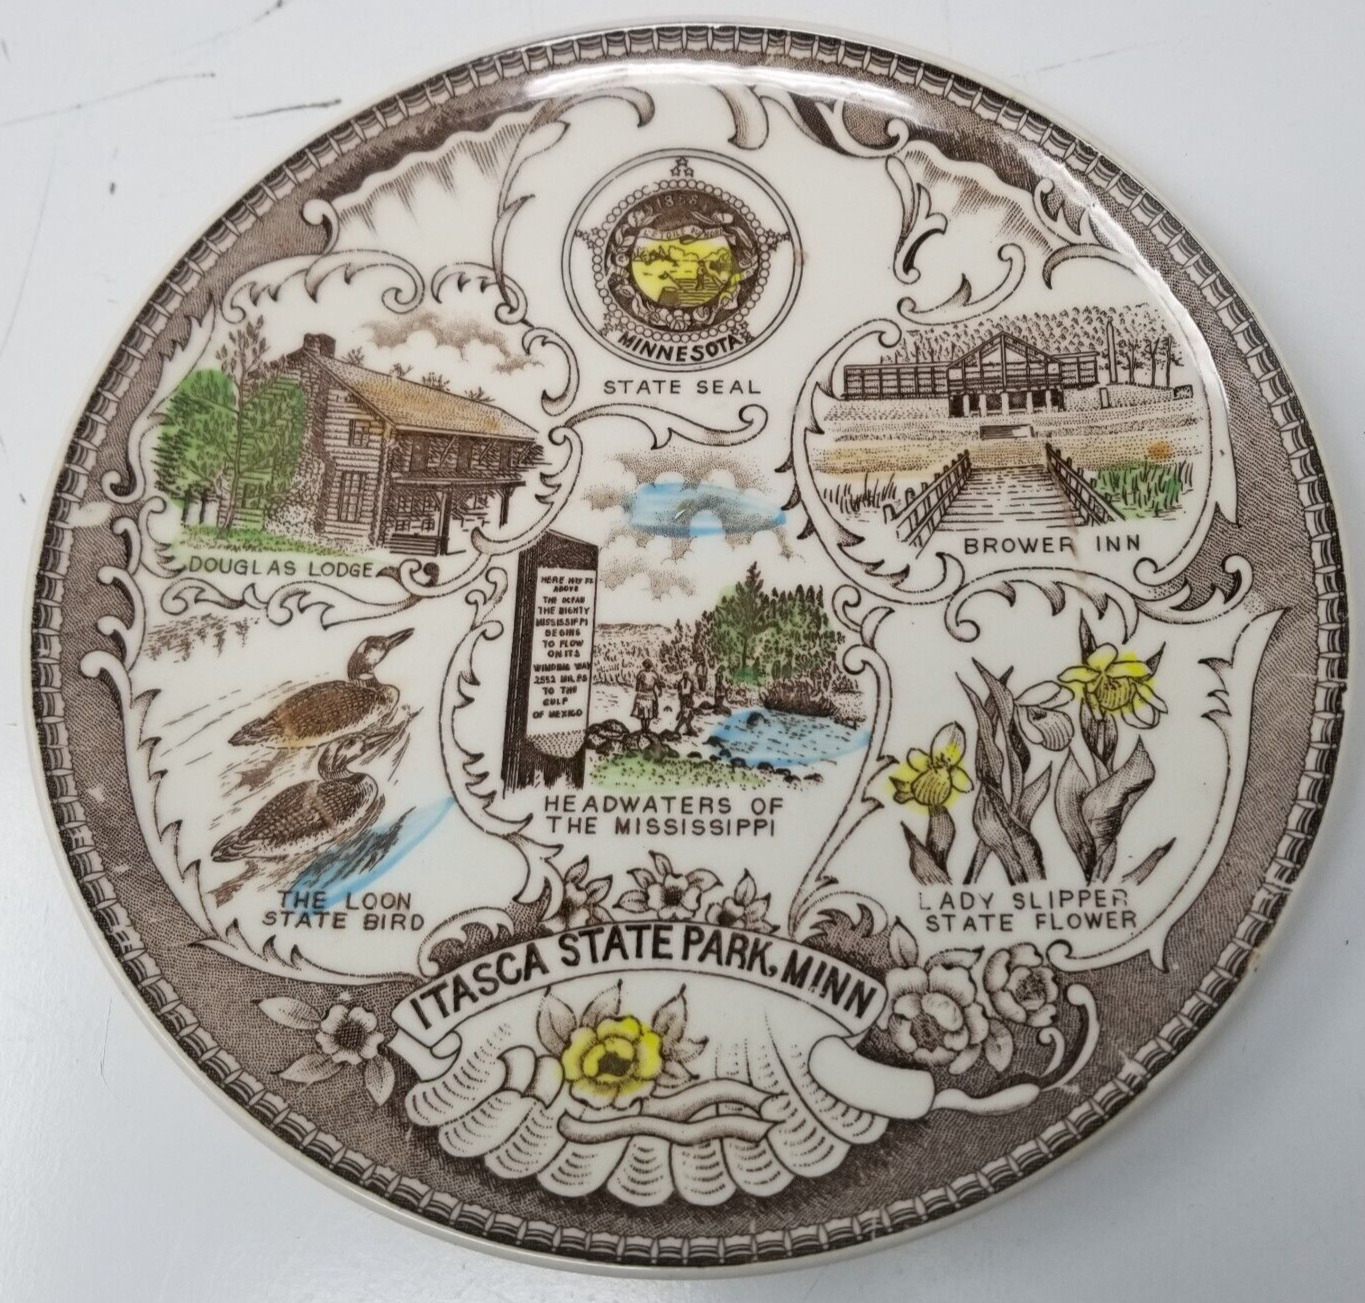 Itasca State Park Minnesota Souvenir Plate Brower Inn Lady Slipper Douglas Lodge